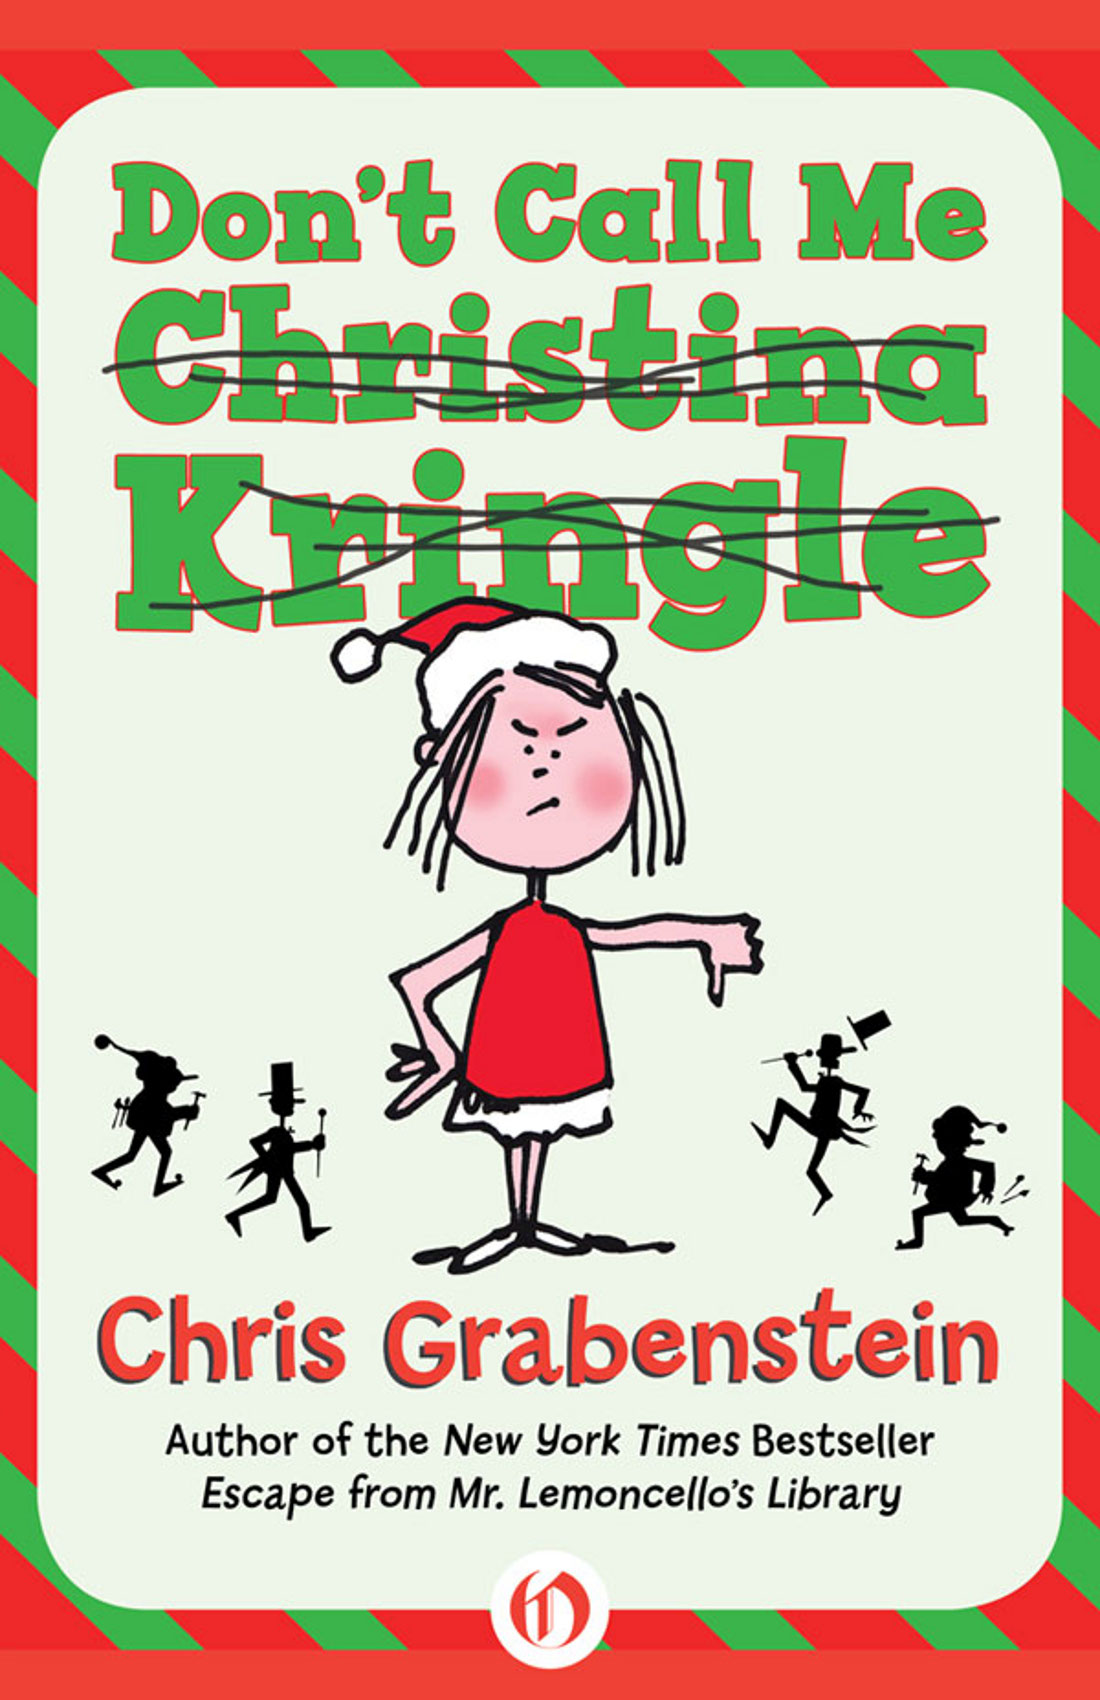 Don't Call Me Christina Kringle by Chris Grabenstein